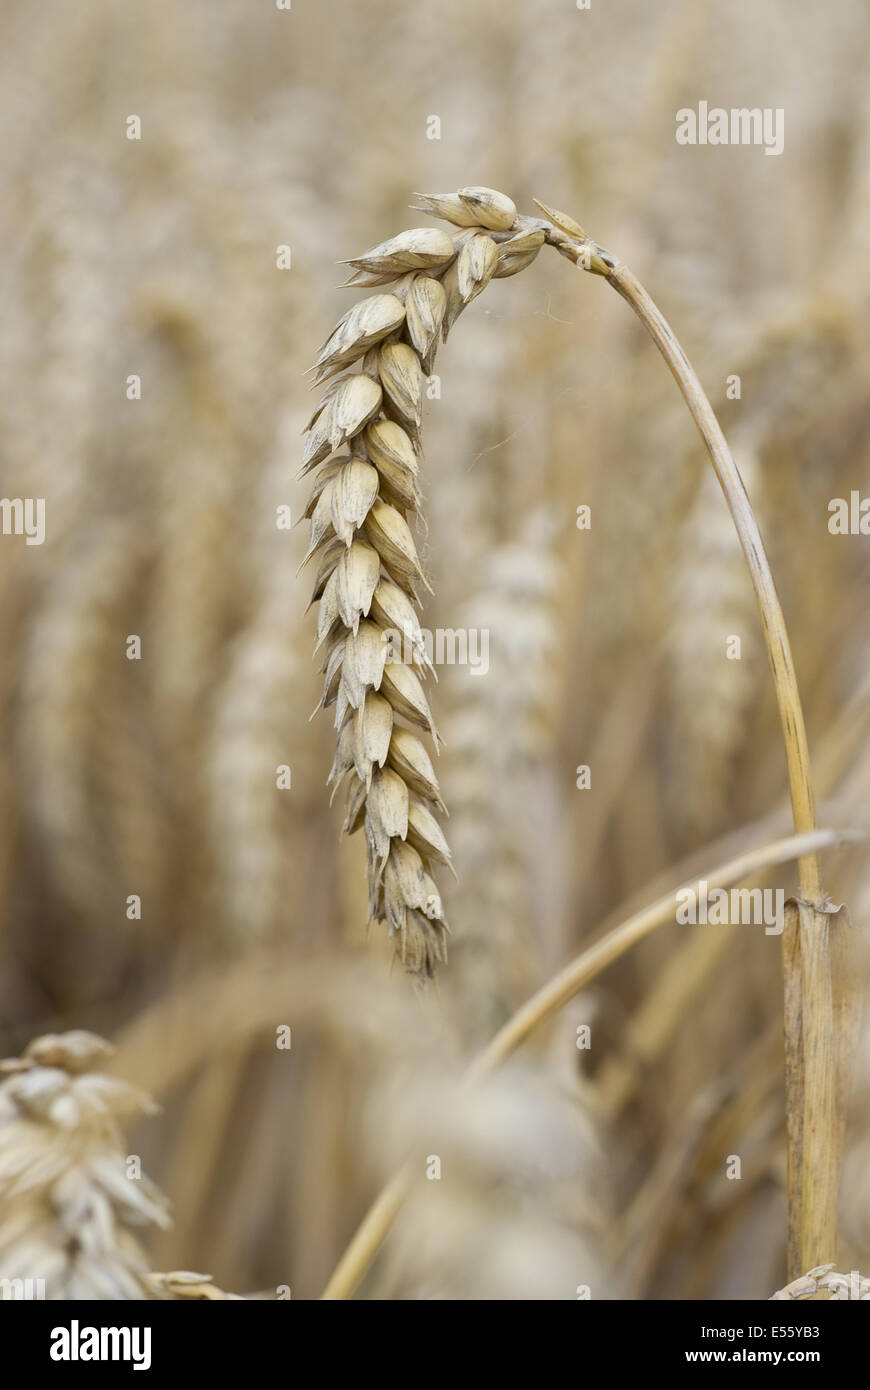 common wheat, triticum aestivum Stock Photo